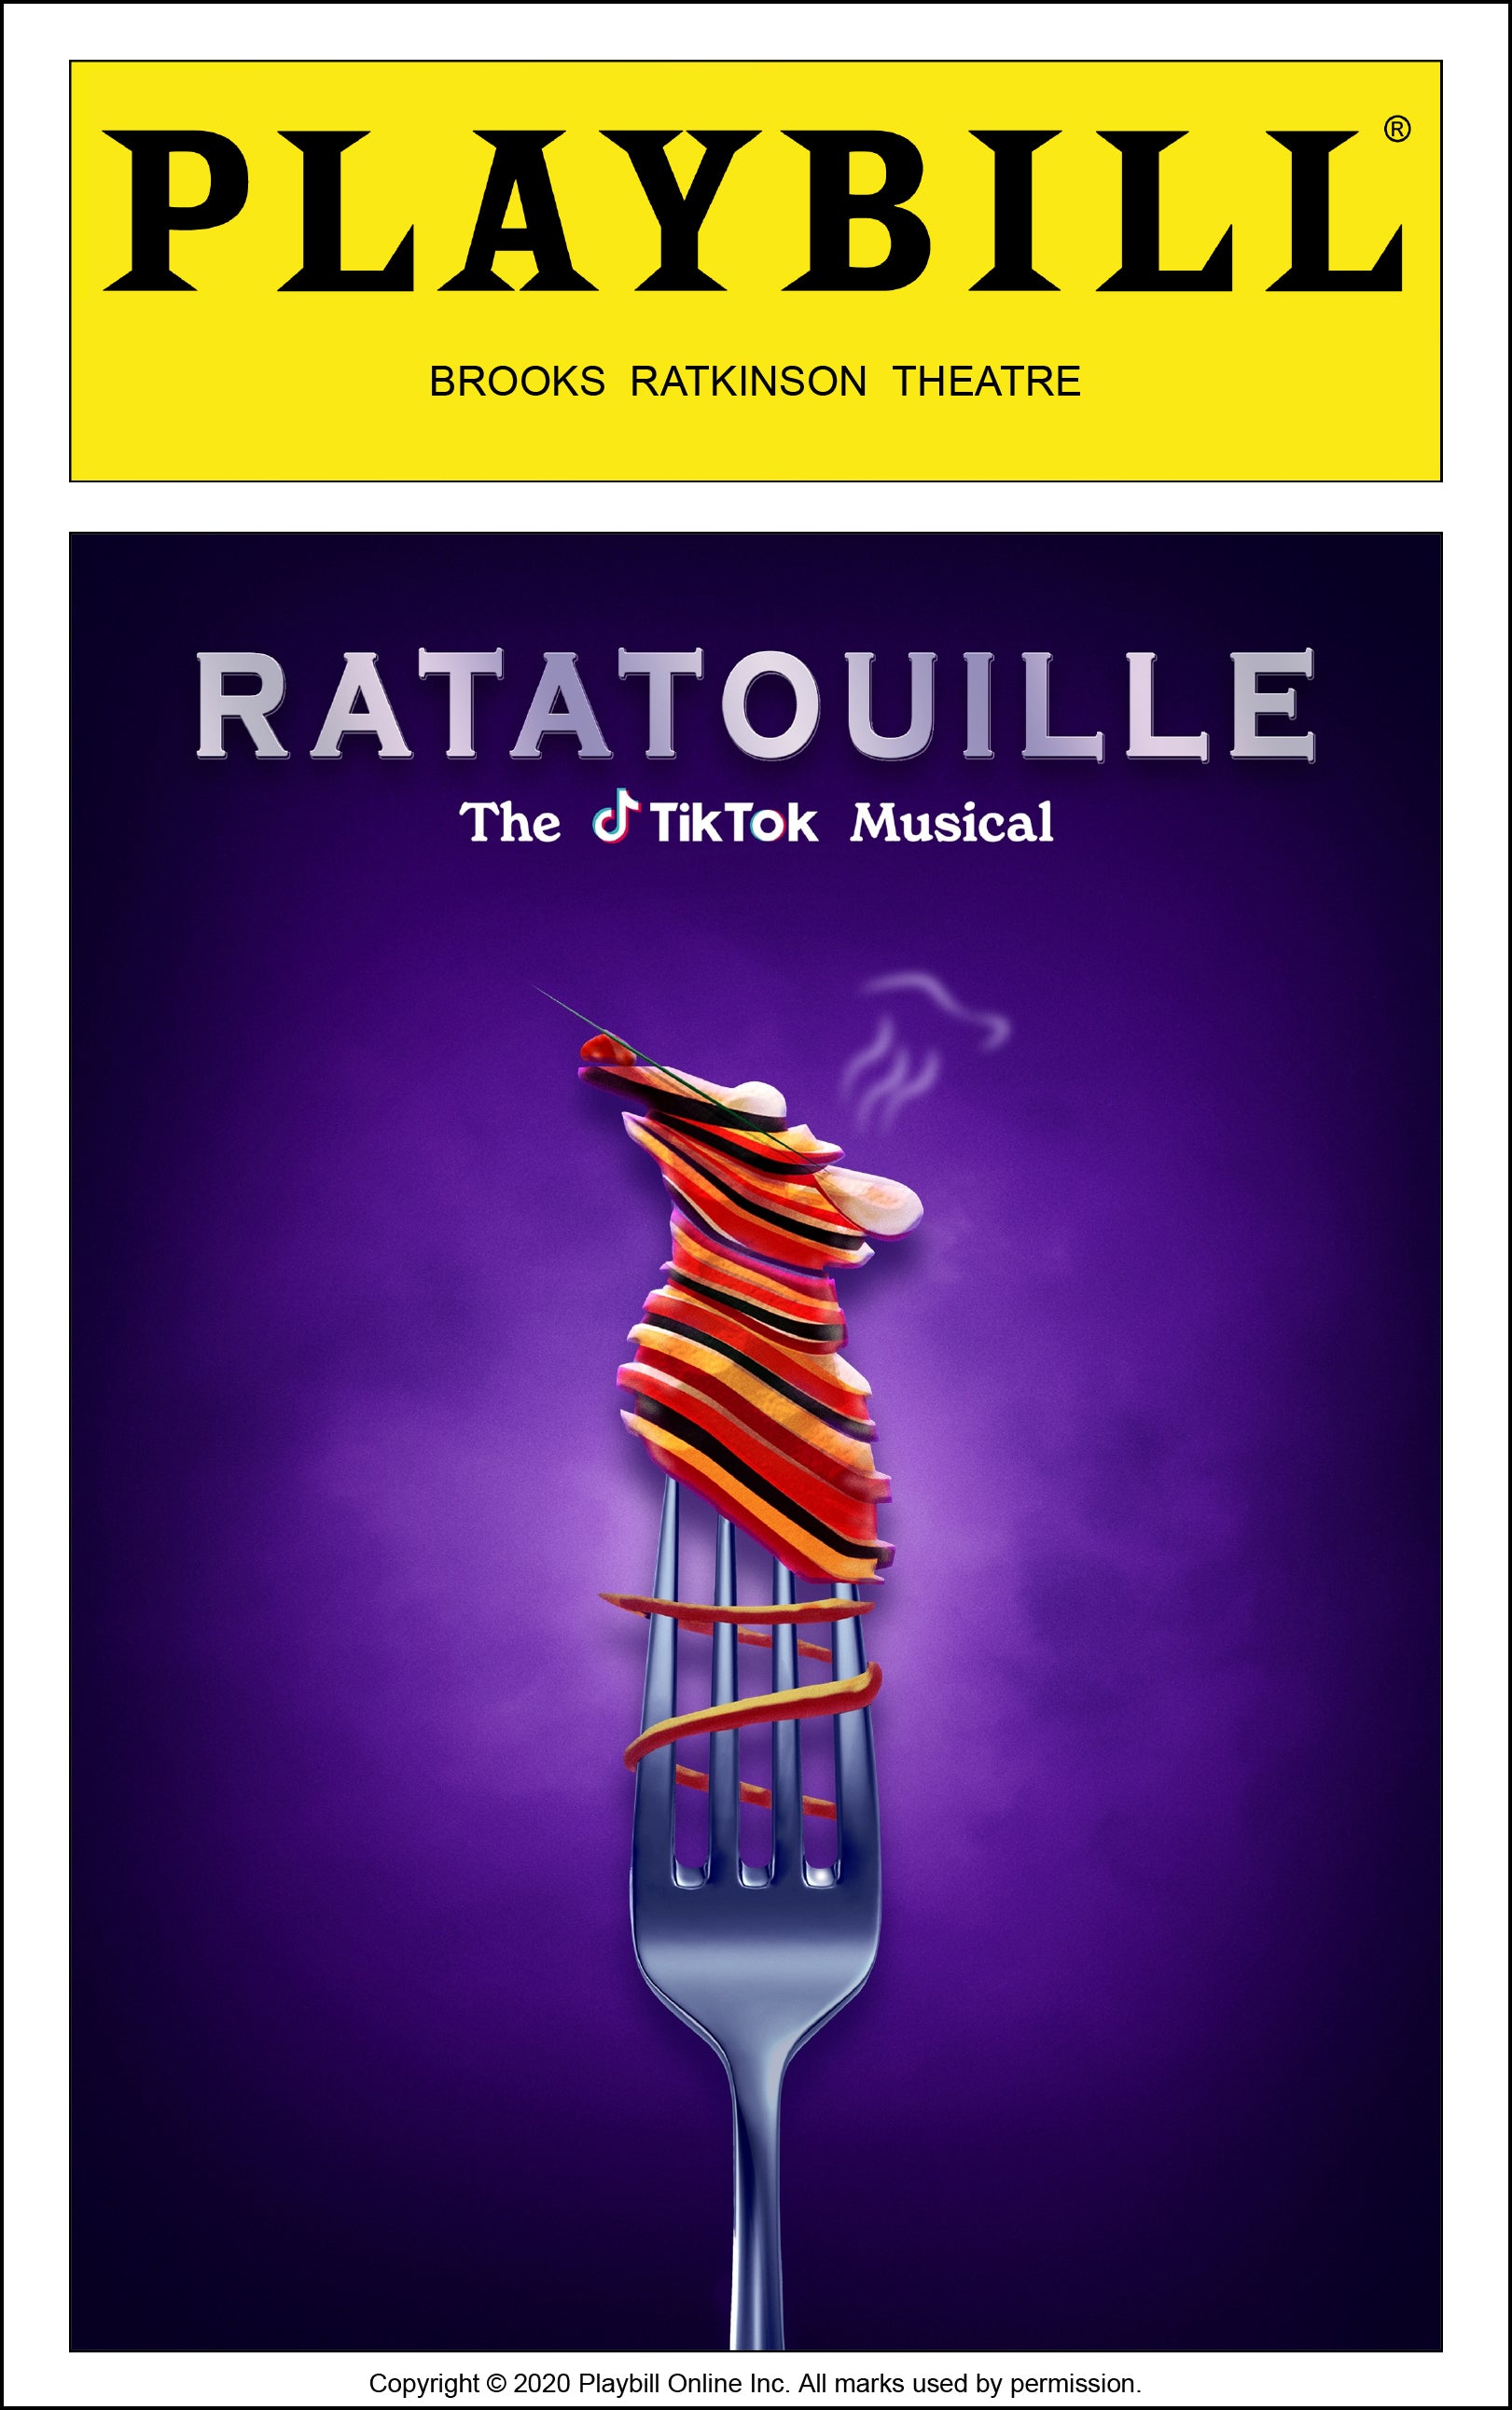 Ratatouille the TikTok Musical Limited Edition Playbill